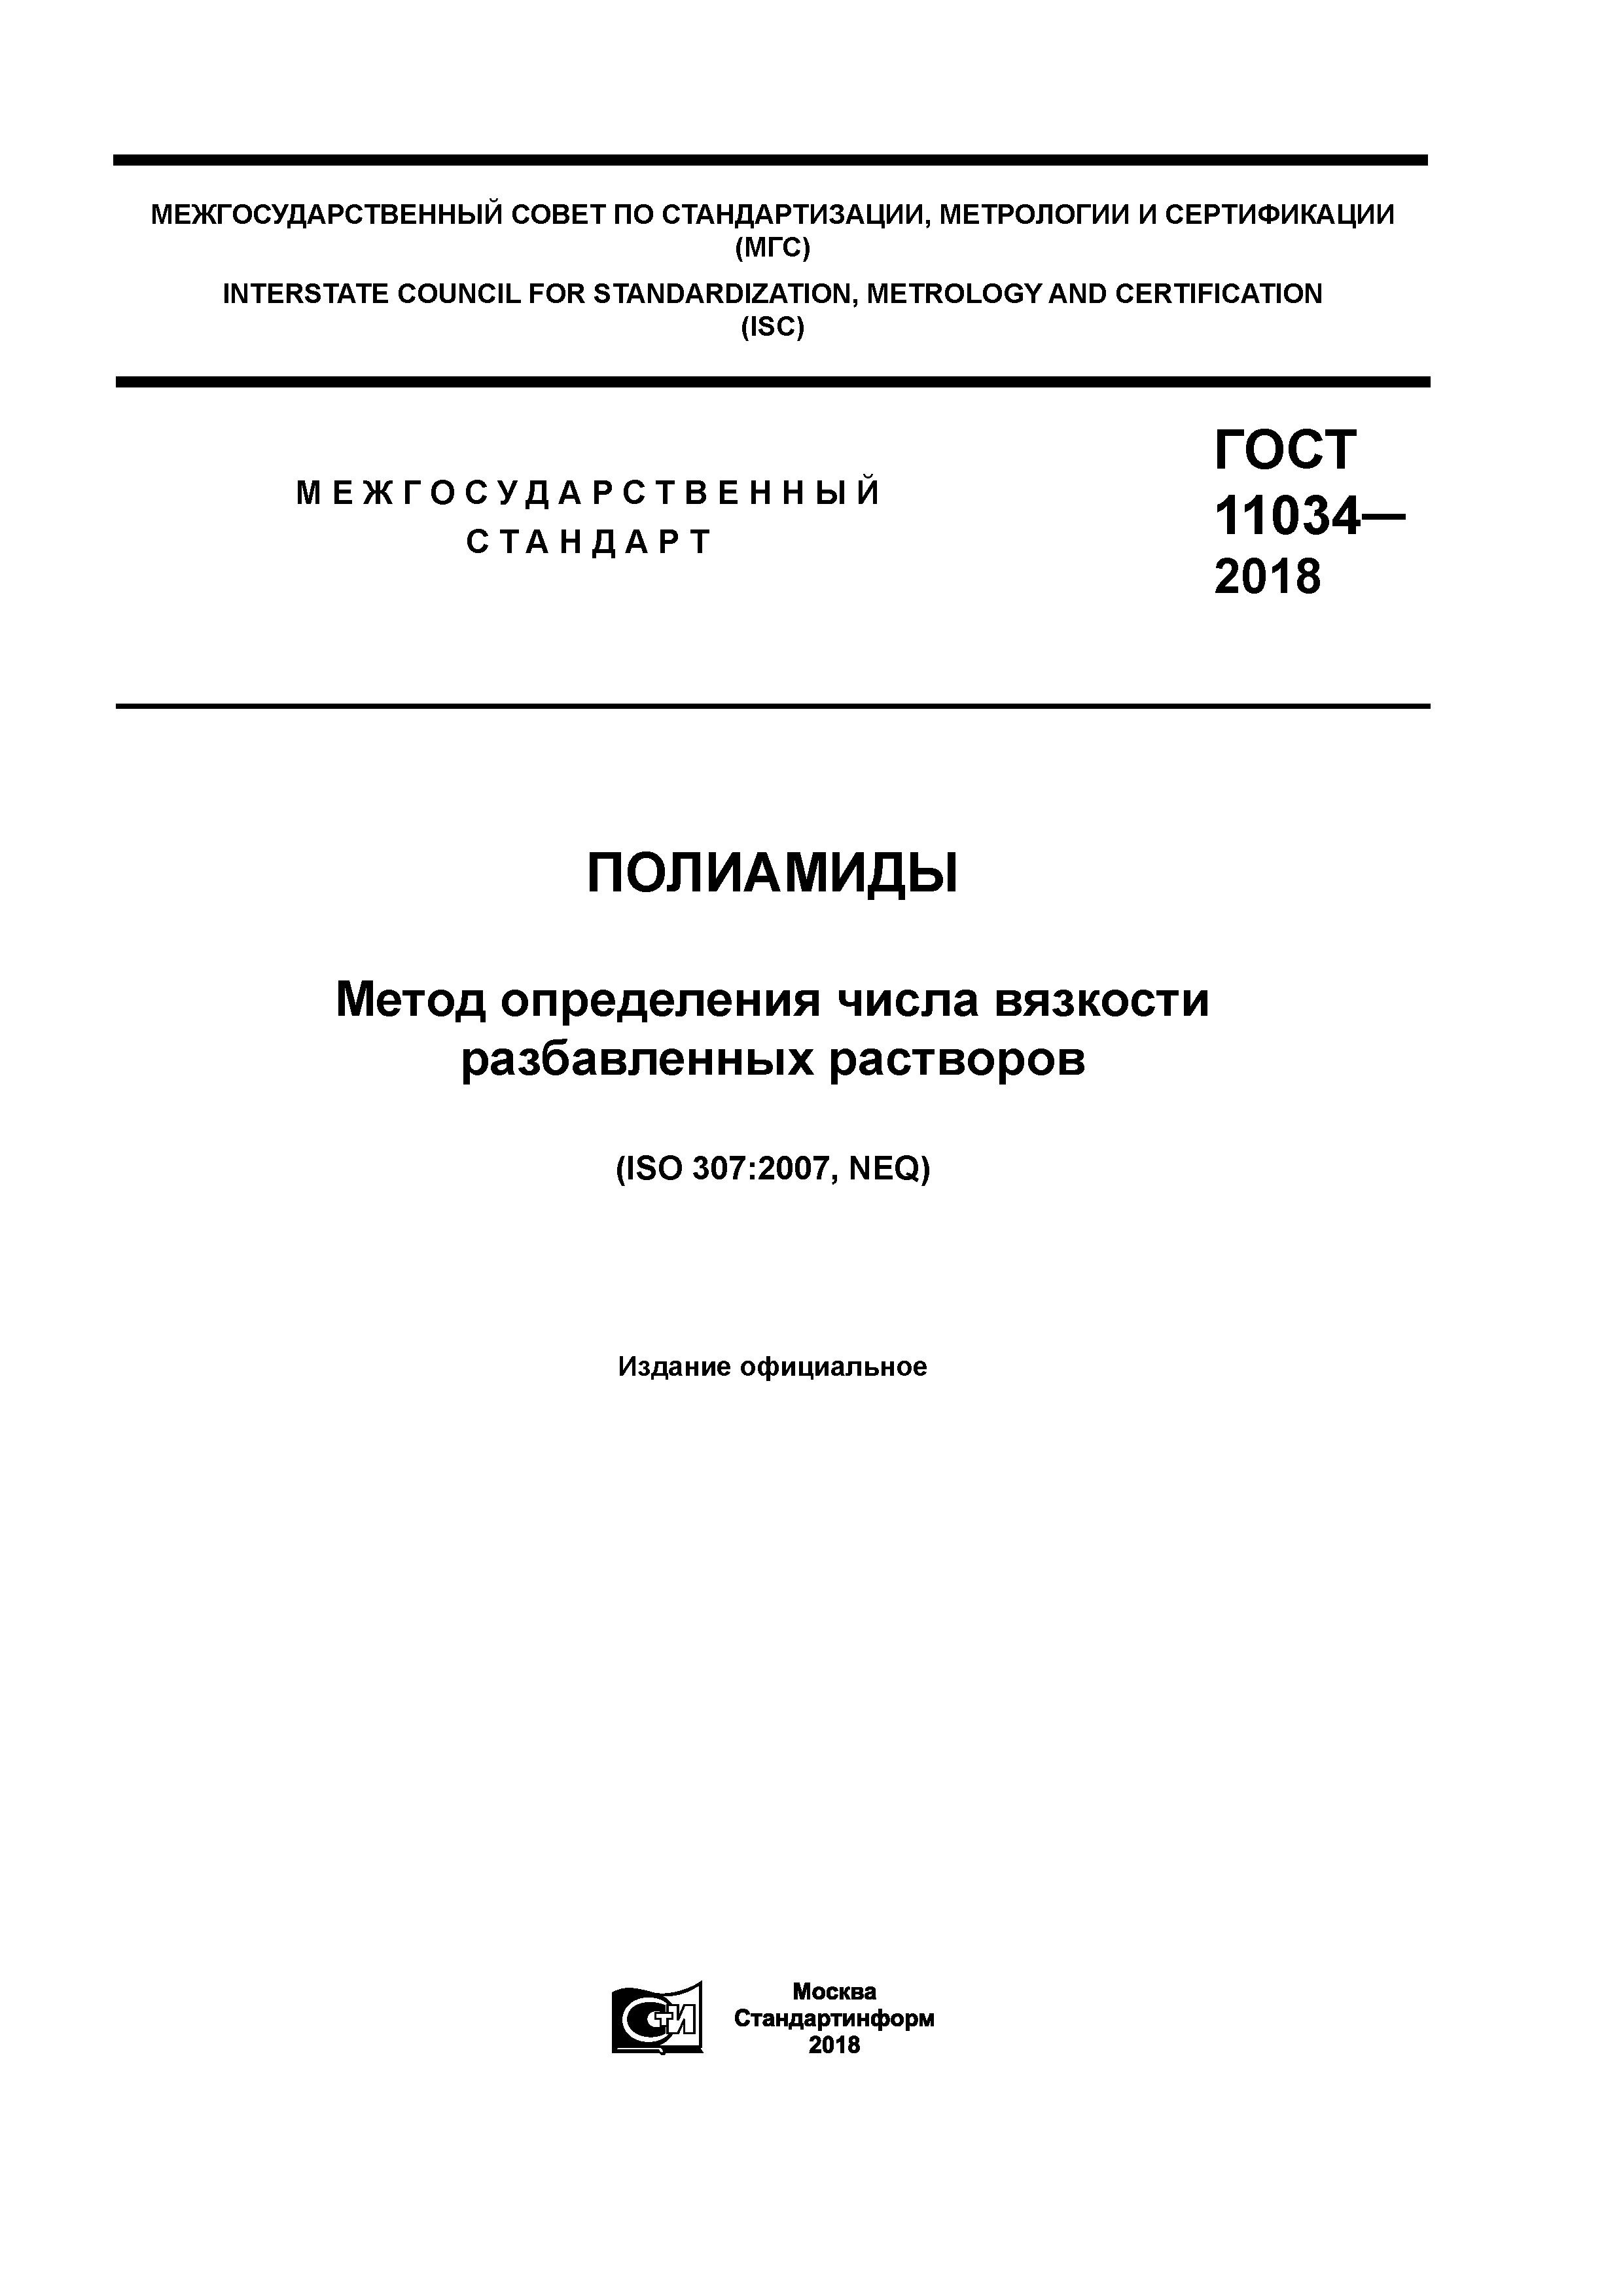 ГОСТ 11034-2018